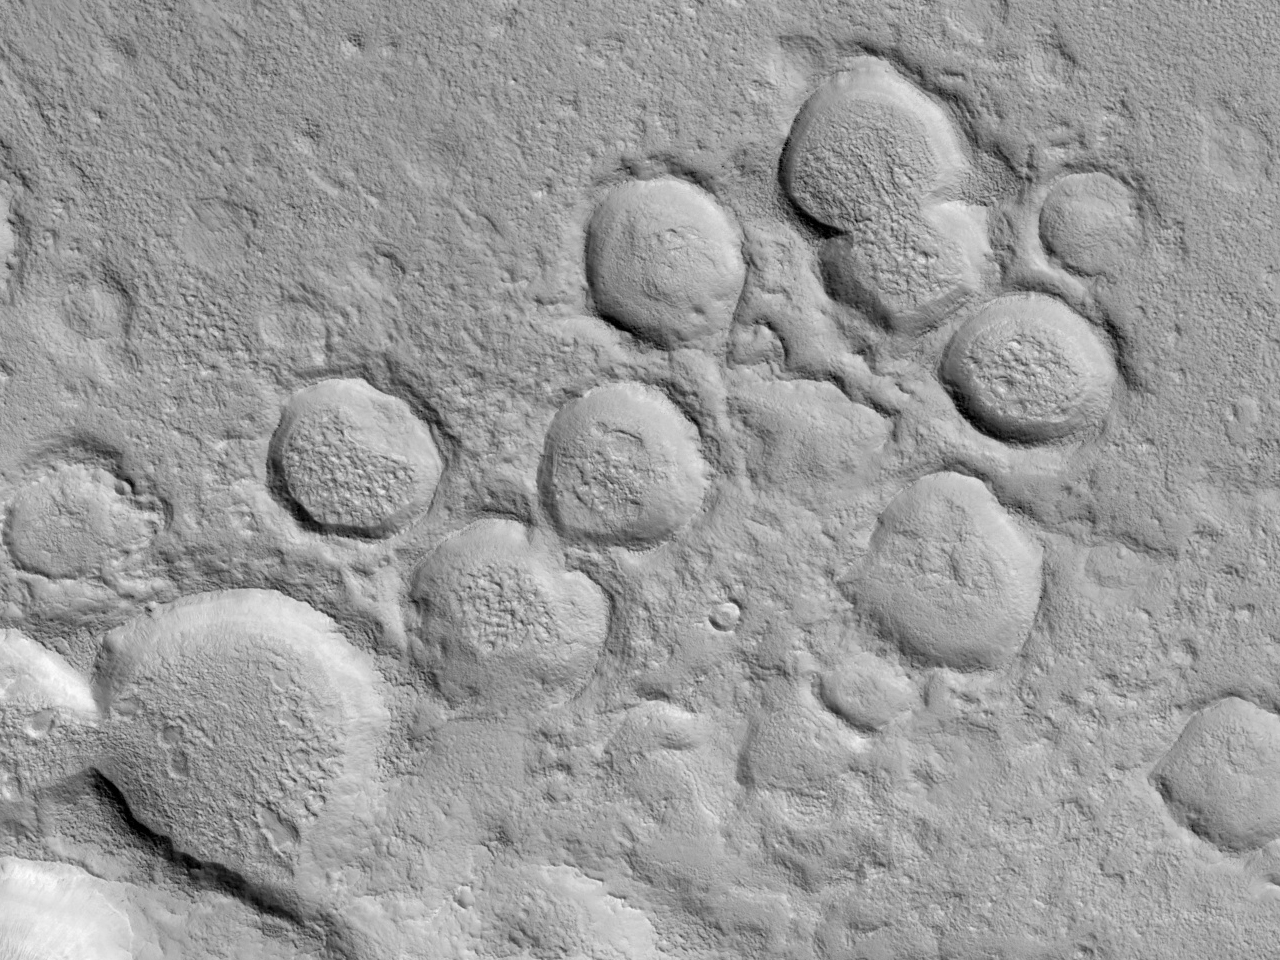 Serie kleine kraters in Utopia Planitia